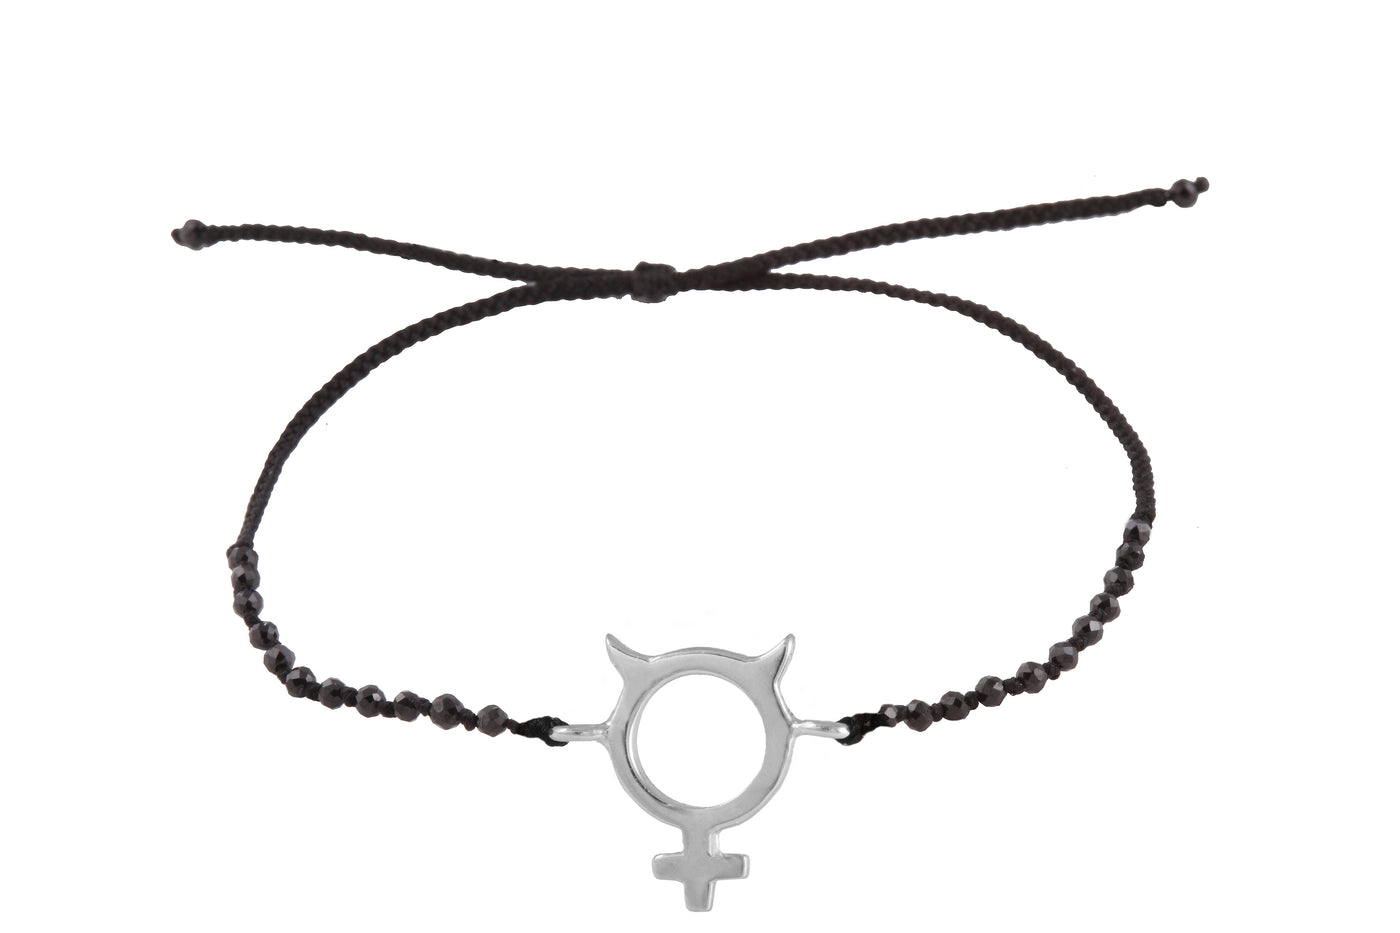 Mercury amulet bracelet with beads. Silver